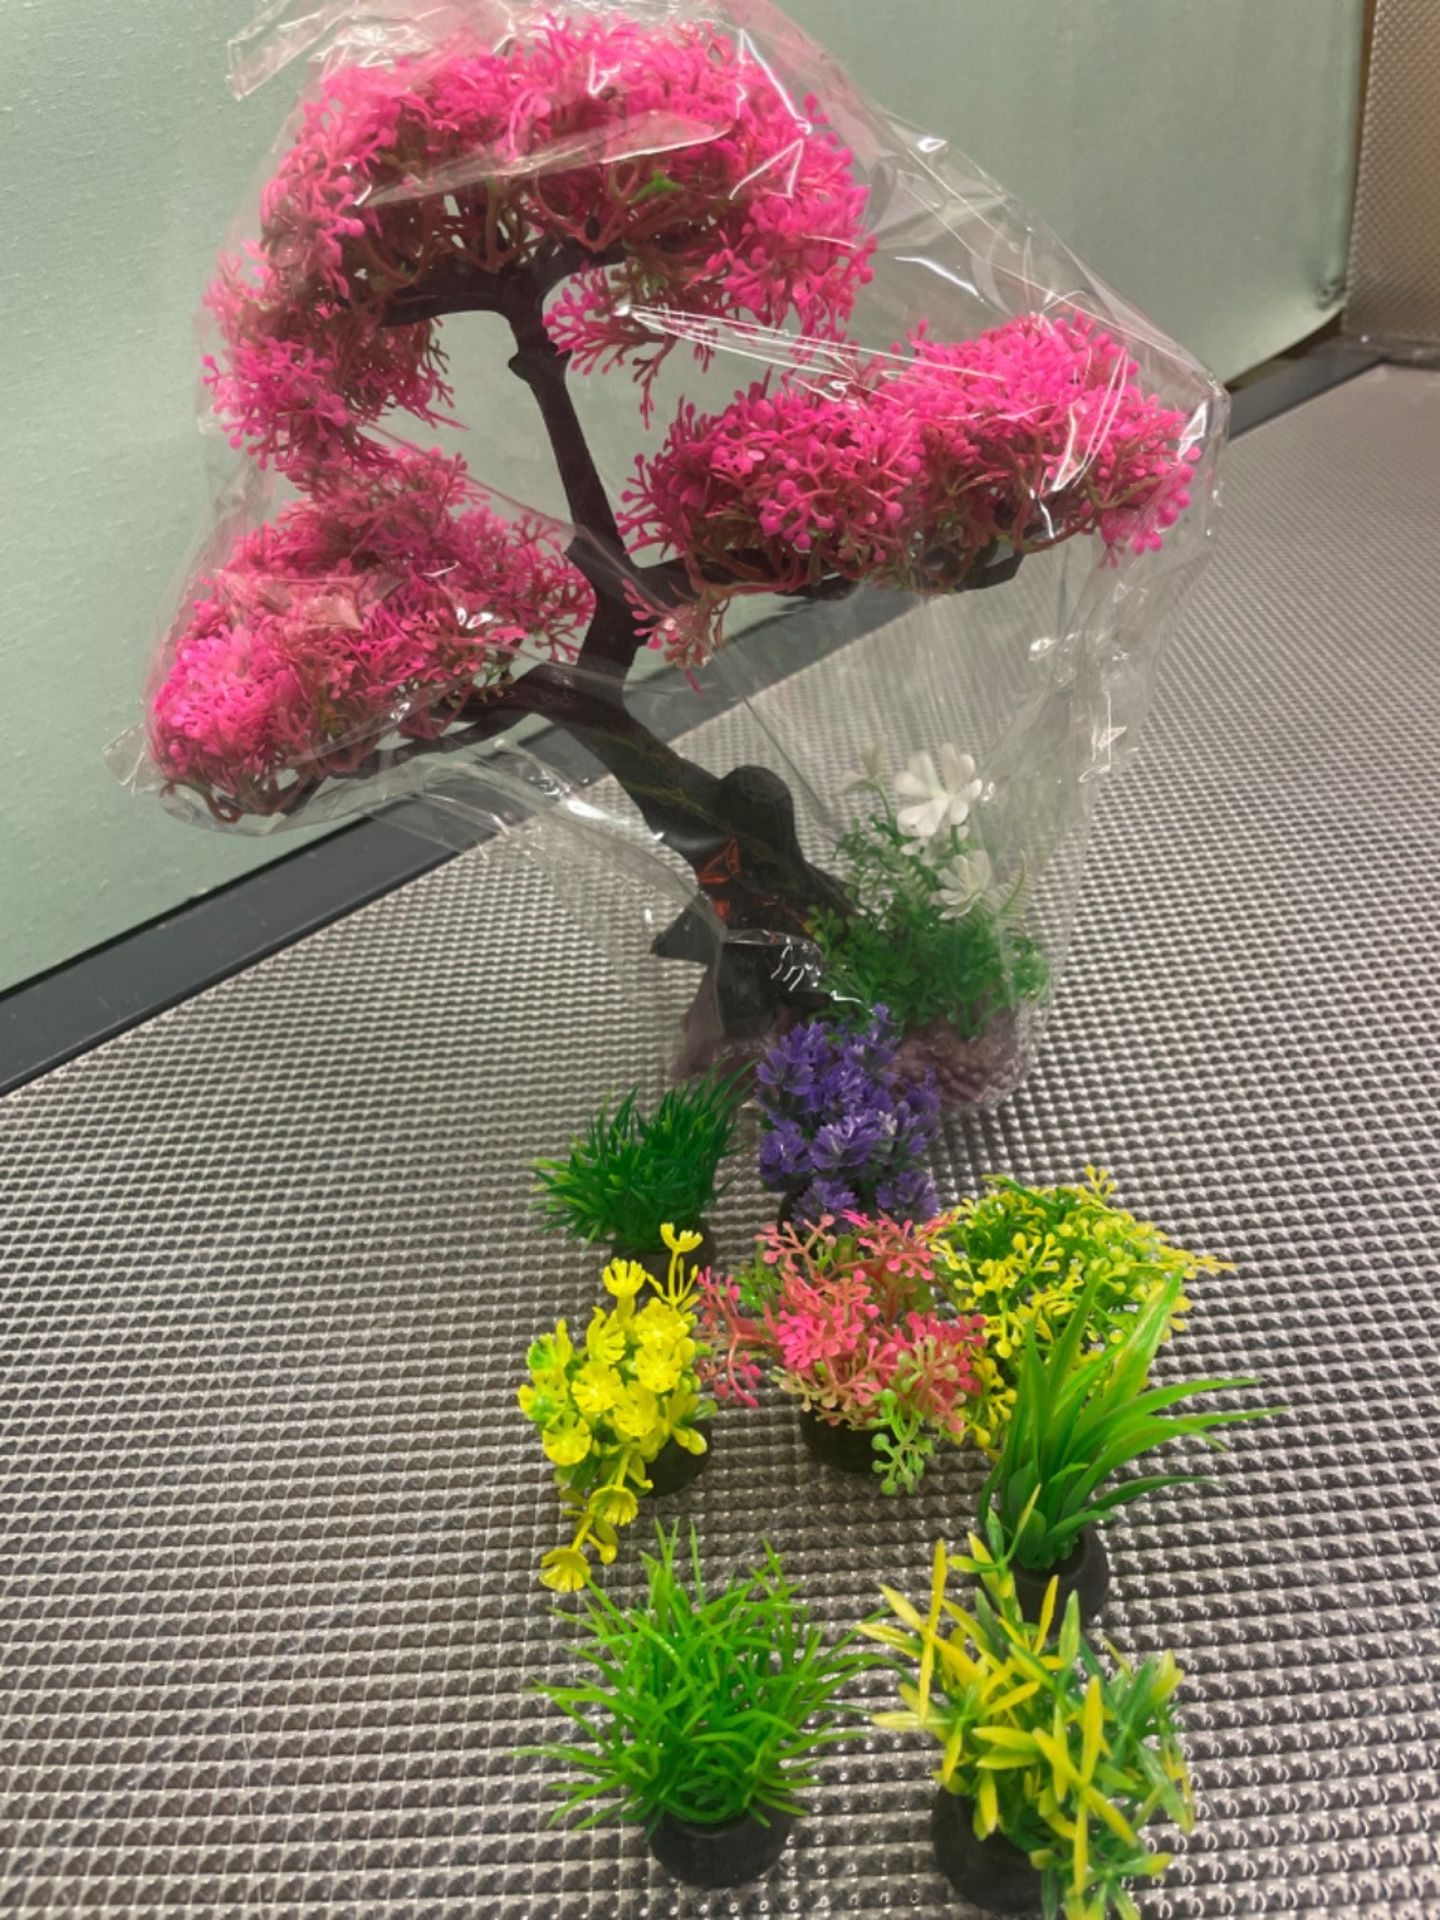 Borlech Aquarium Tree Plants Decorations, Fish Tank Plastic Plant Decor Set 10 Pieces (Pink) - Image 2 of 3